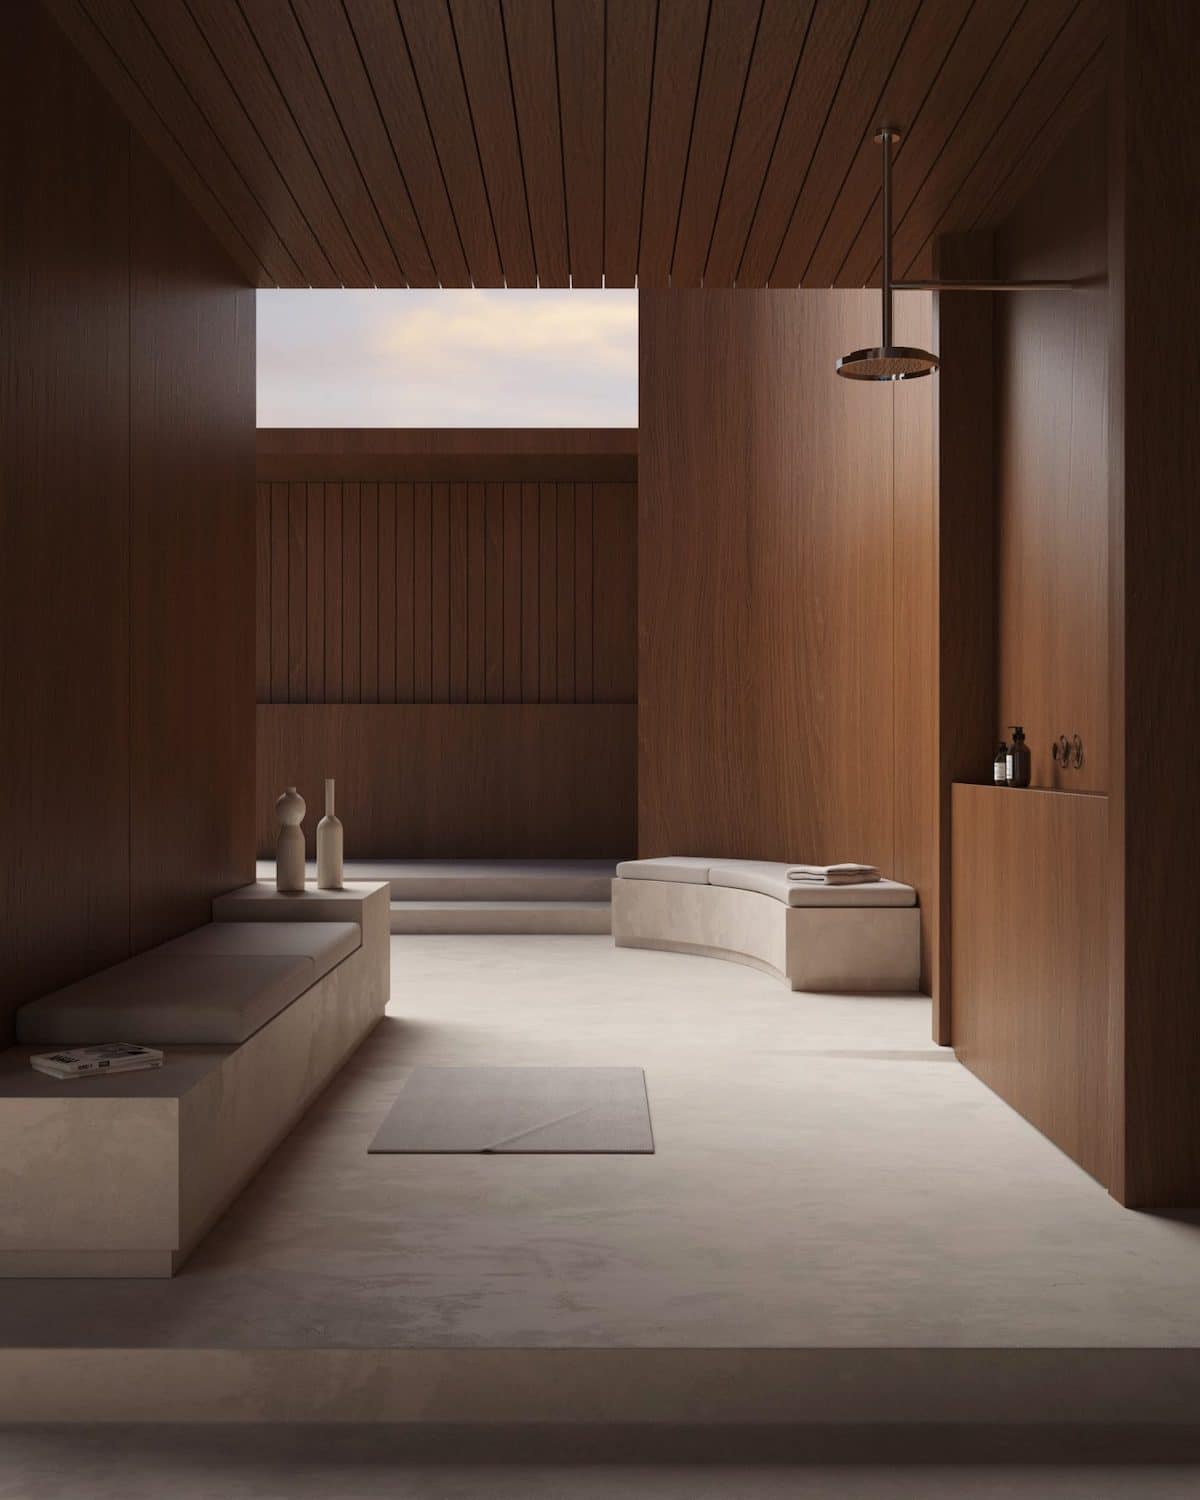 Wood-Detailed Room in Interior Rendering by Sébastien Baert